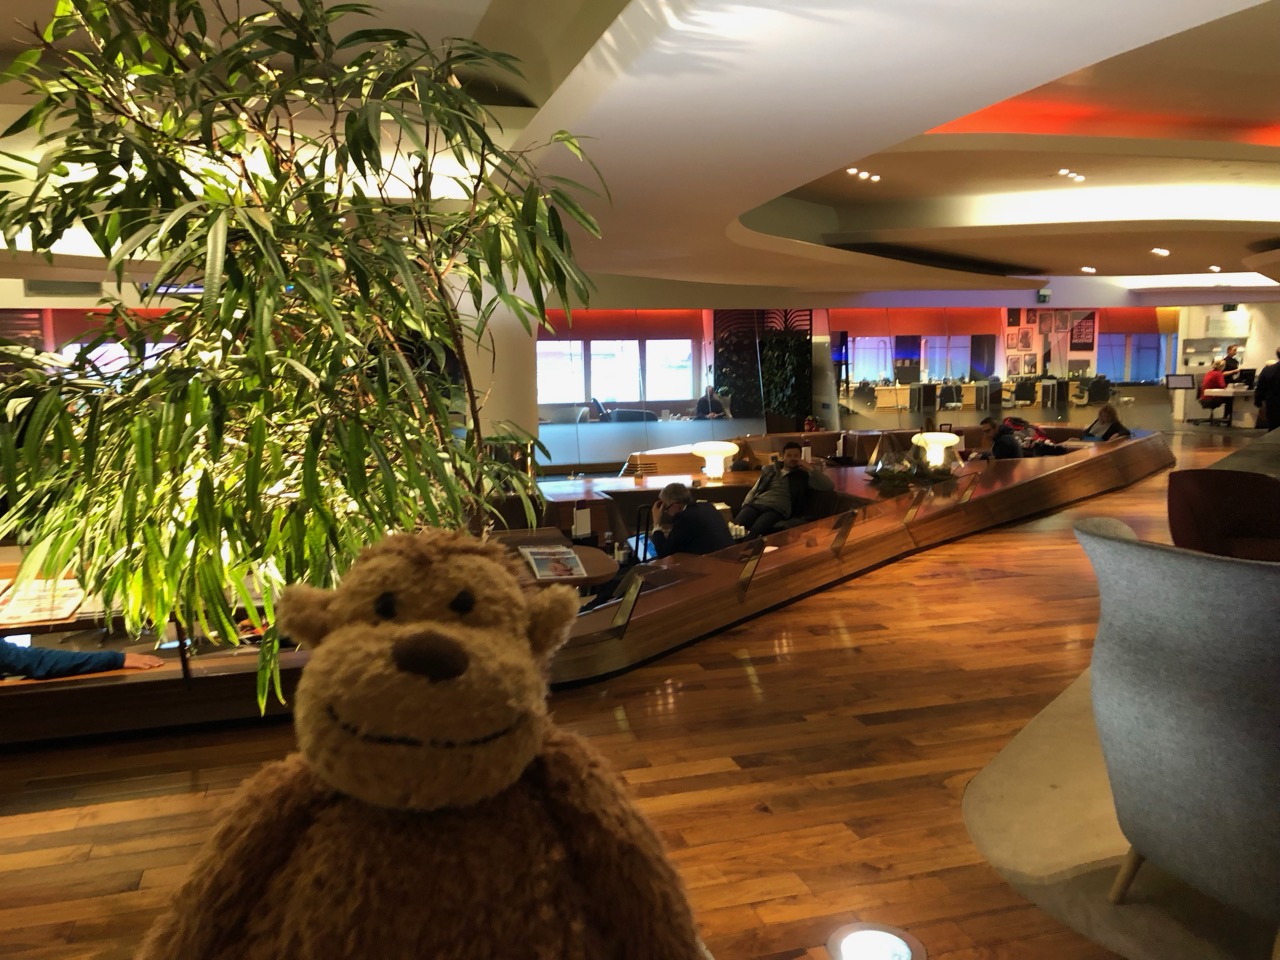 a stuffed monkey in a lobby